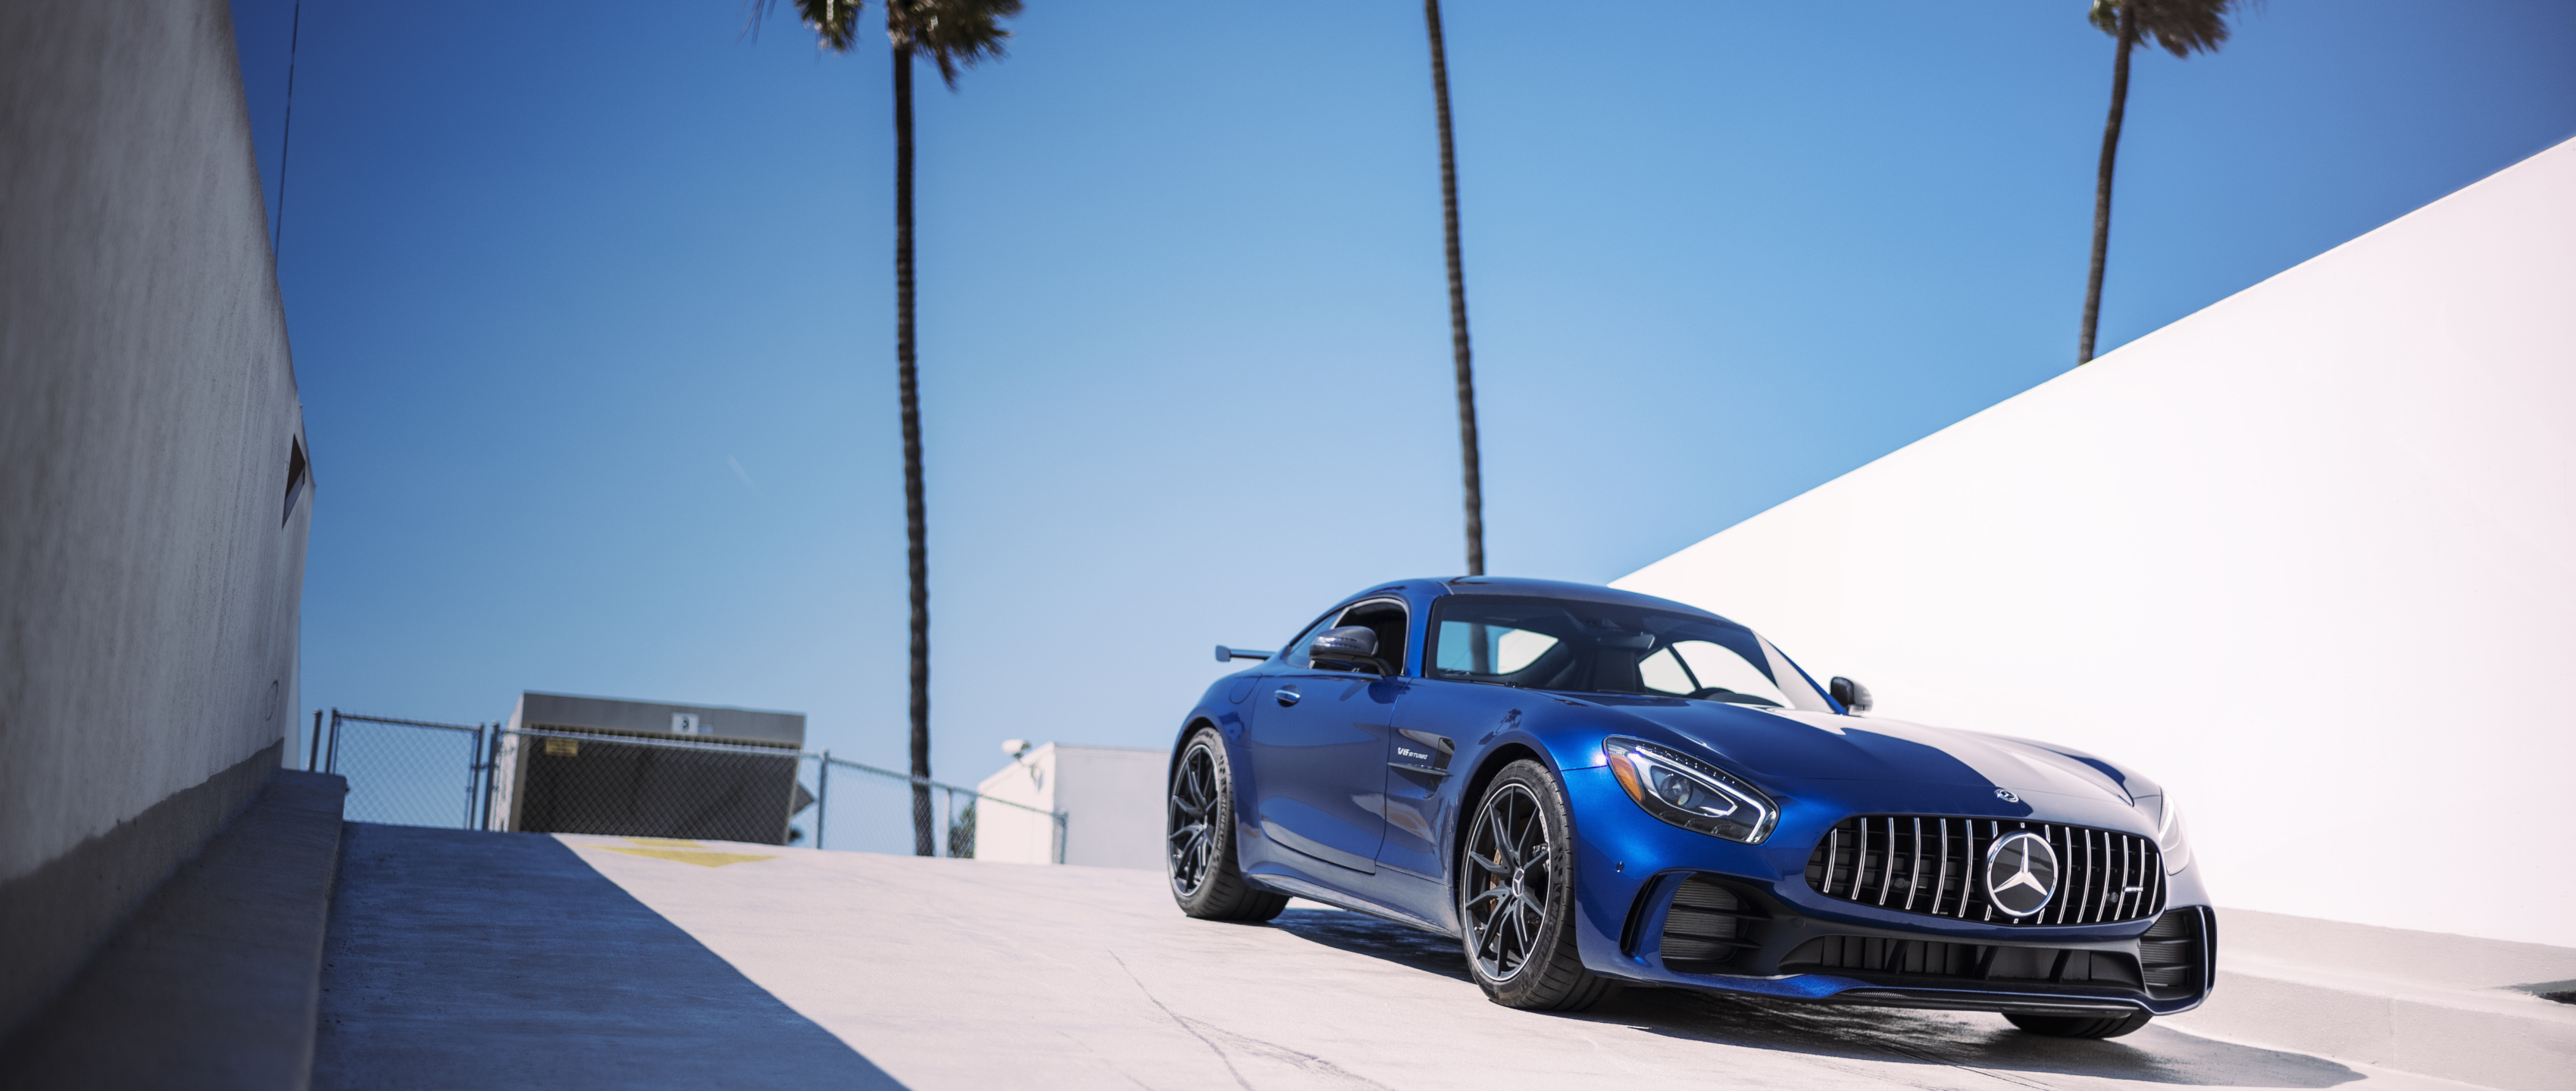 The Mercedes-amg Gt R In Brilliant Blue In California - Amg Gt Wallpaper 4k Pc - HD Wallpaper 